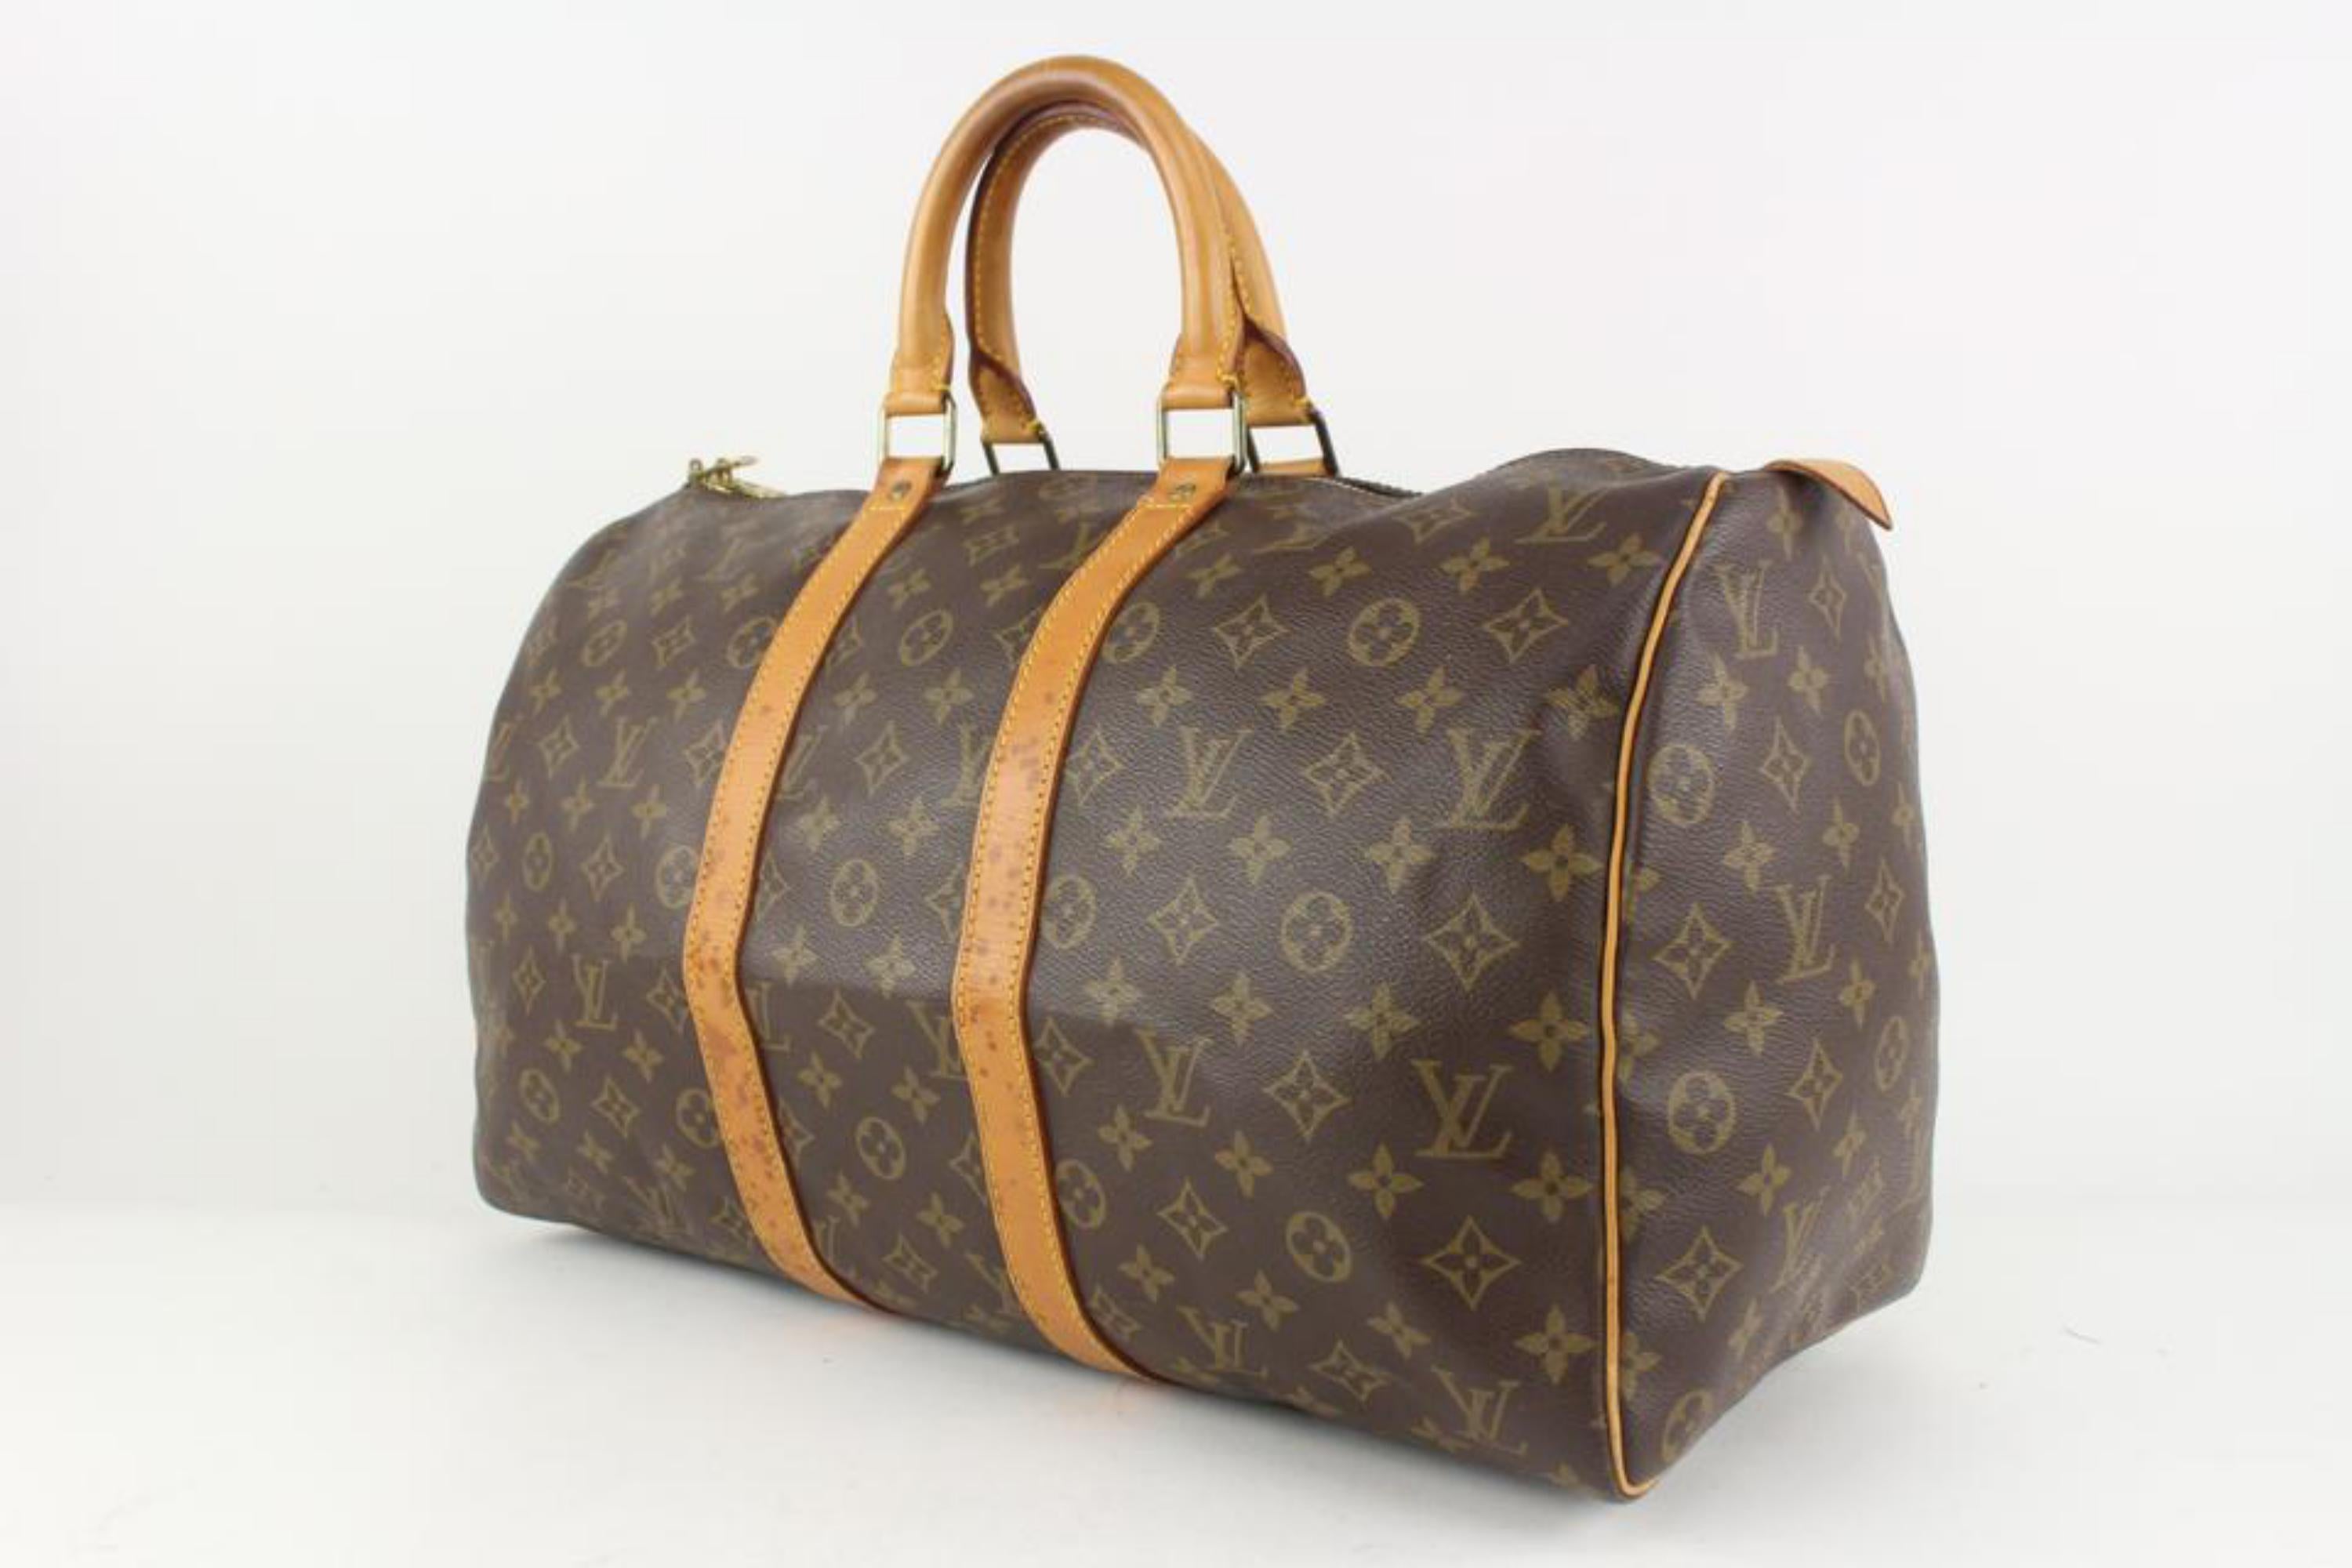 Louis Vuitton Monogram Keepall 45 Boston Duffle Bag 1119lv48
Date Code/Serial Number: VI8909
Made In: France
Measurements: Length:  18